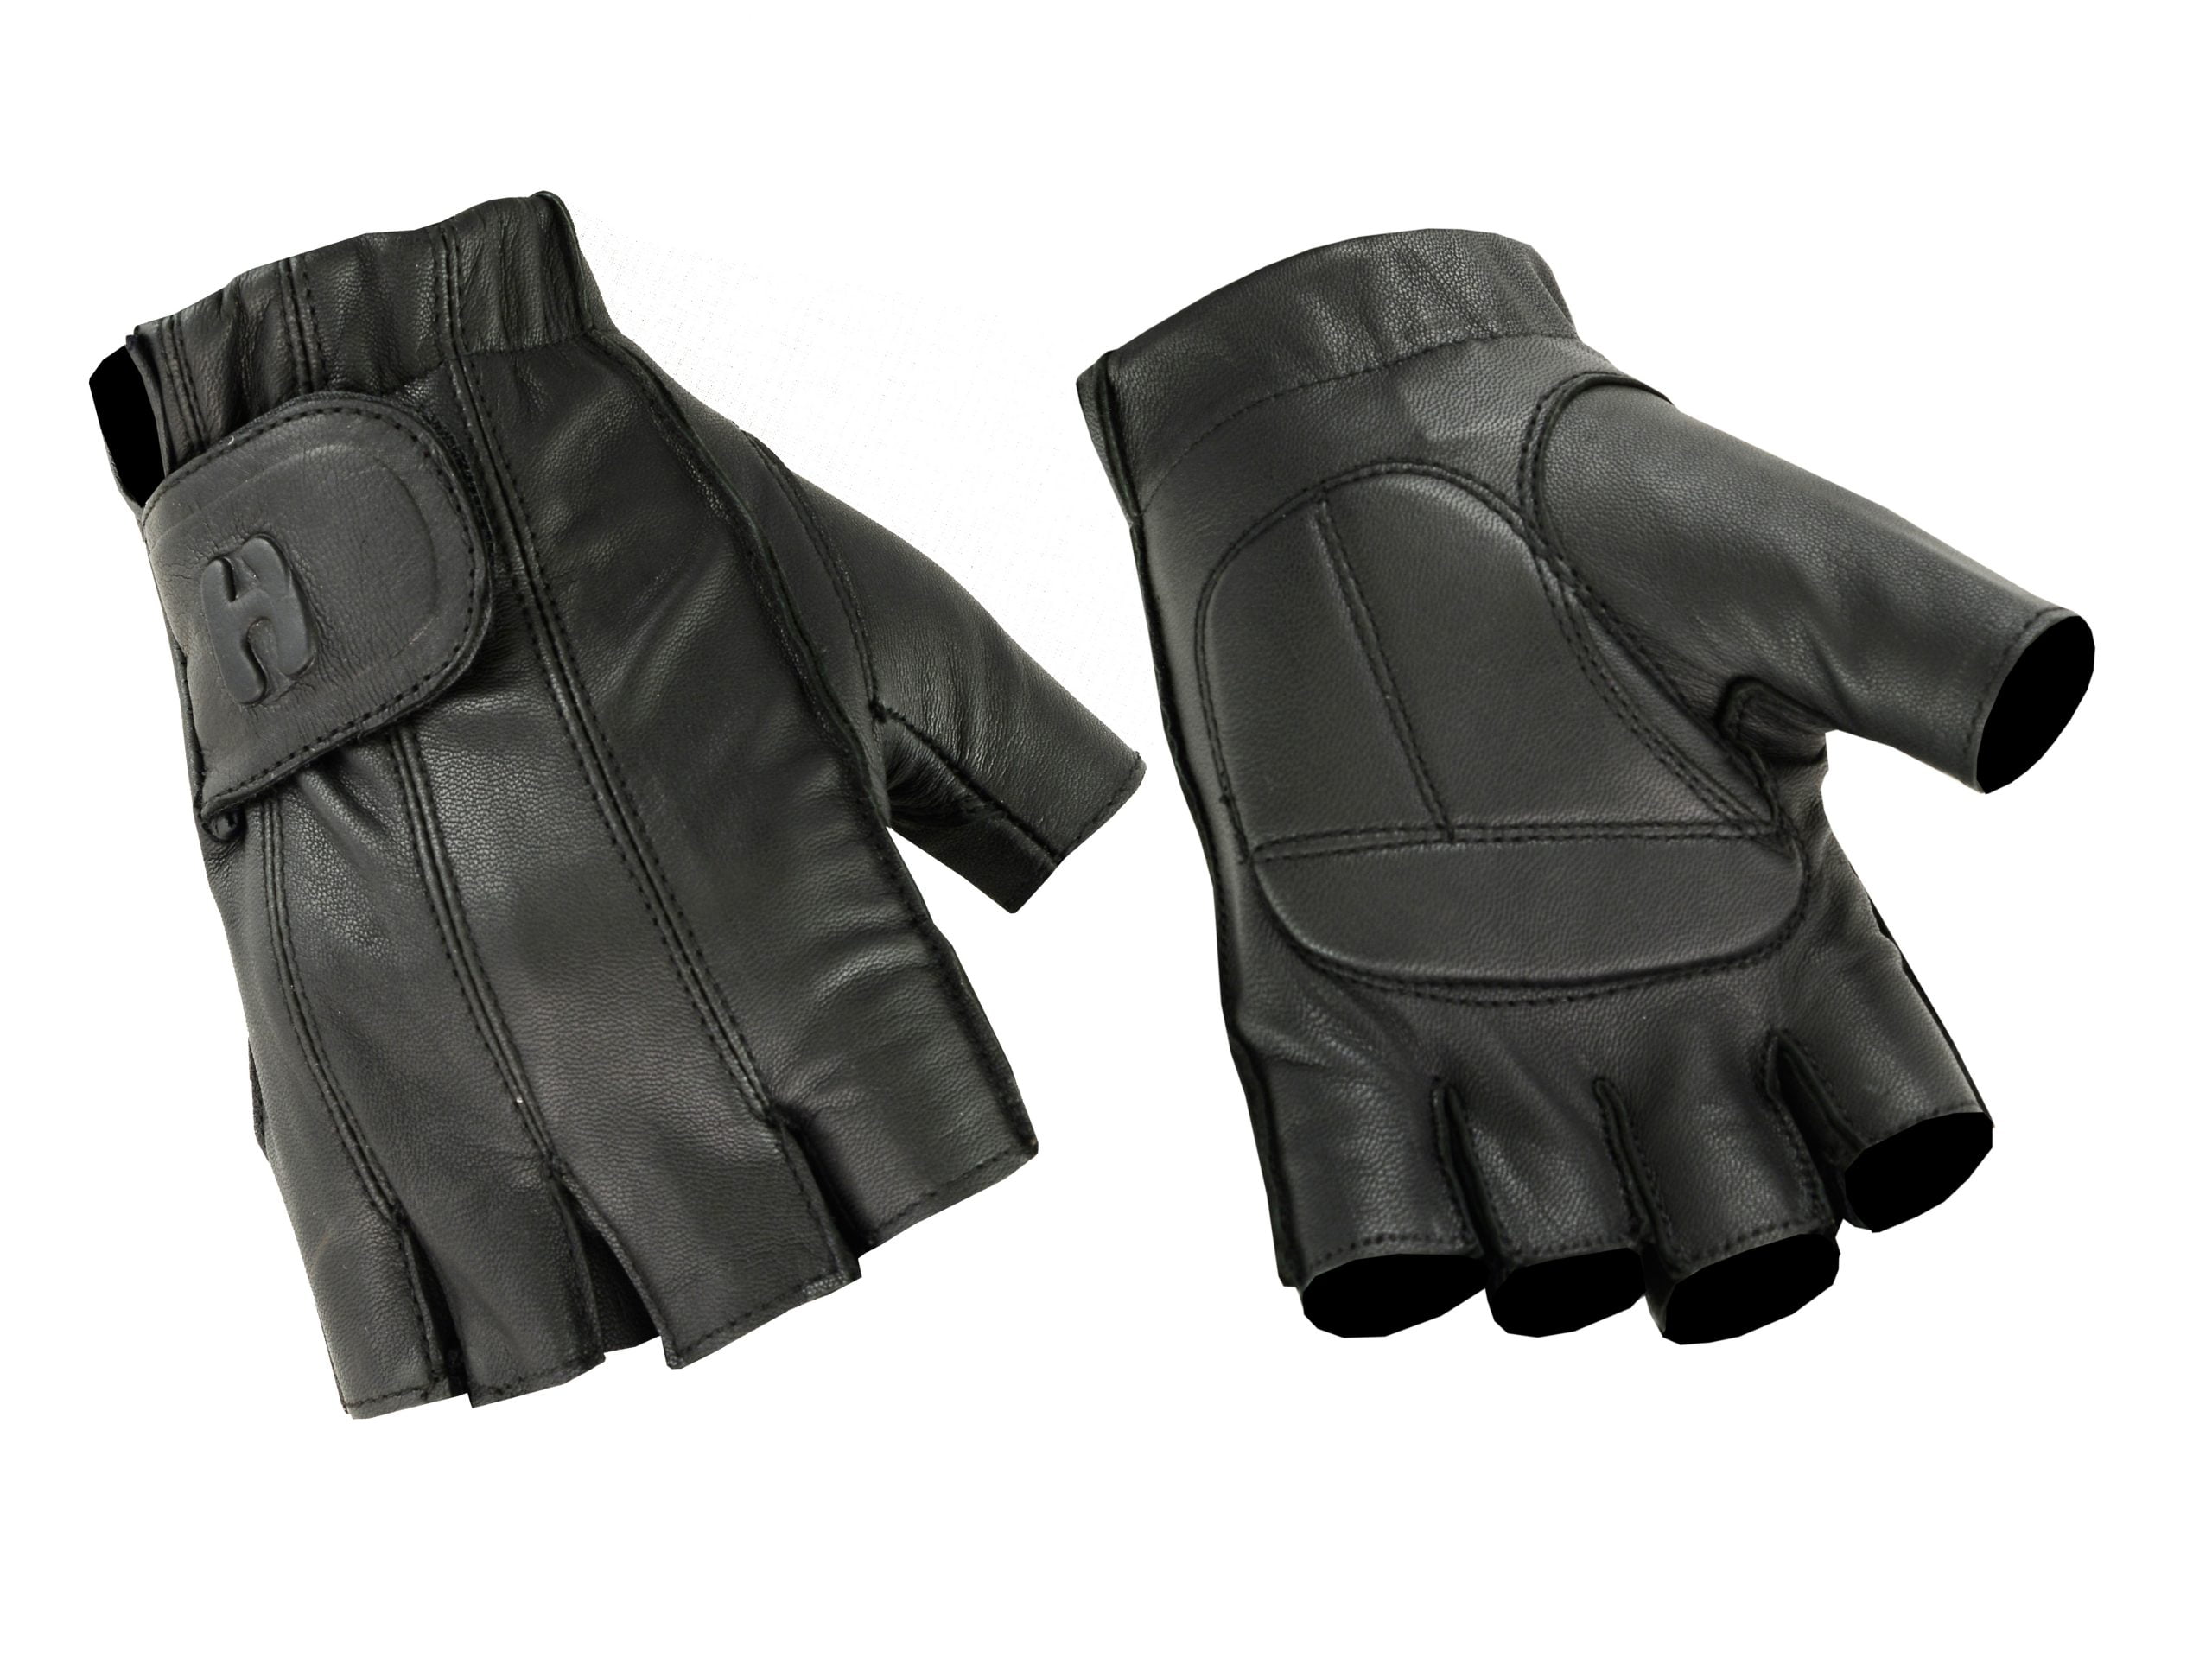 fingerless motorcycle gloves | fingerless motorcycle glove